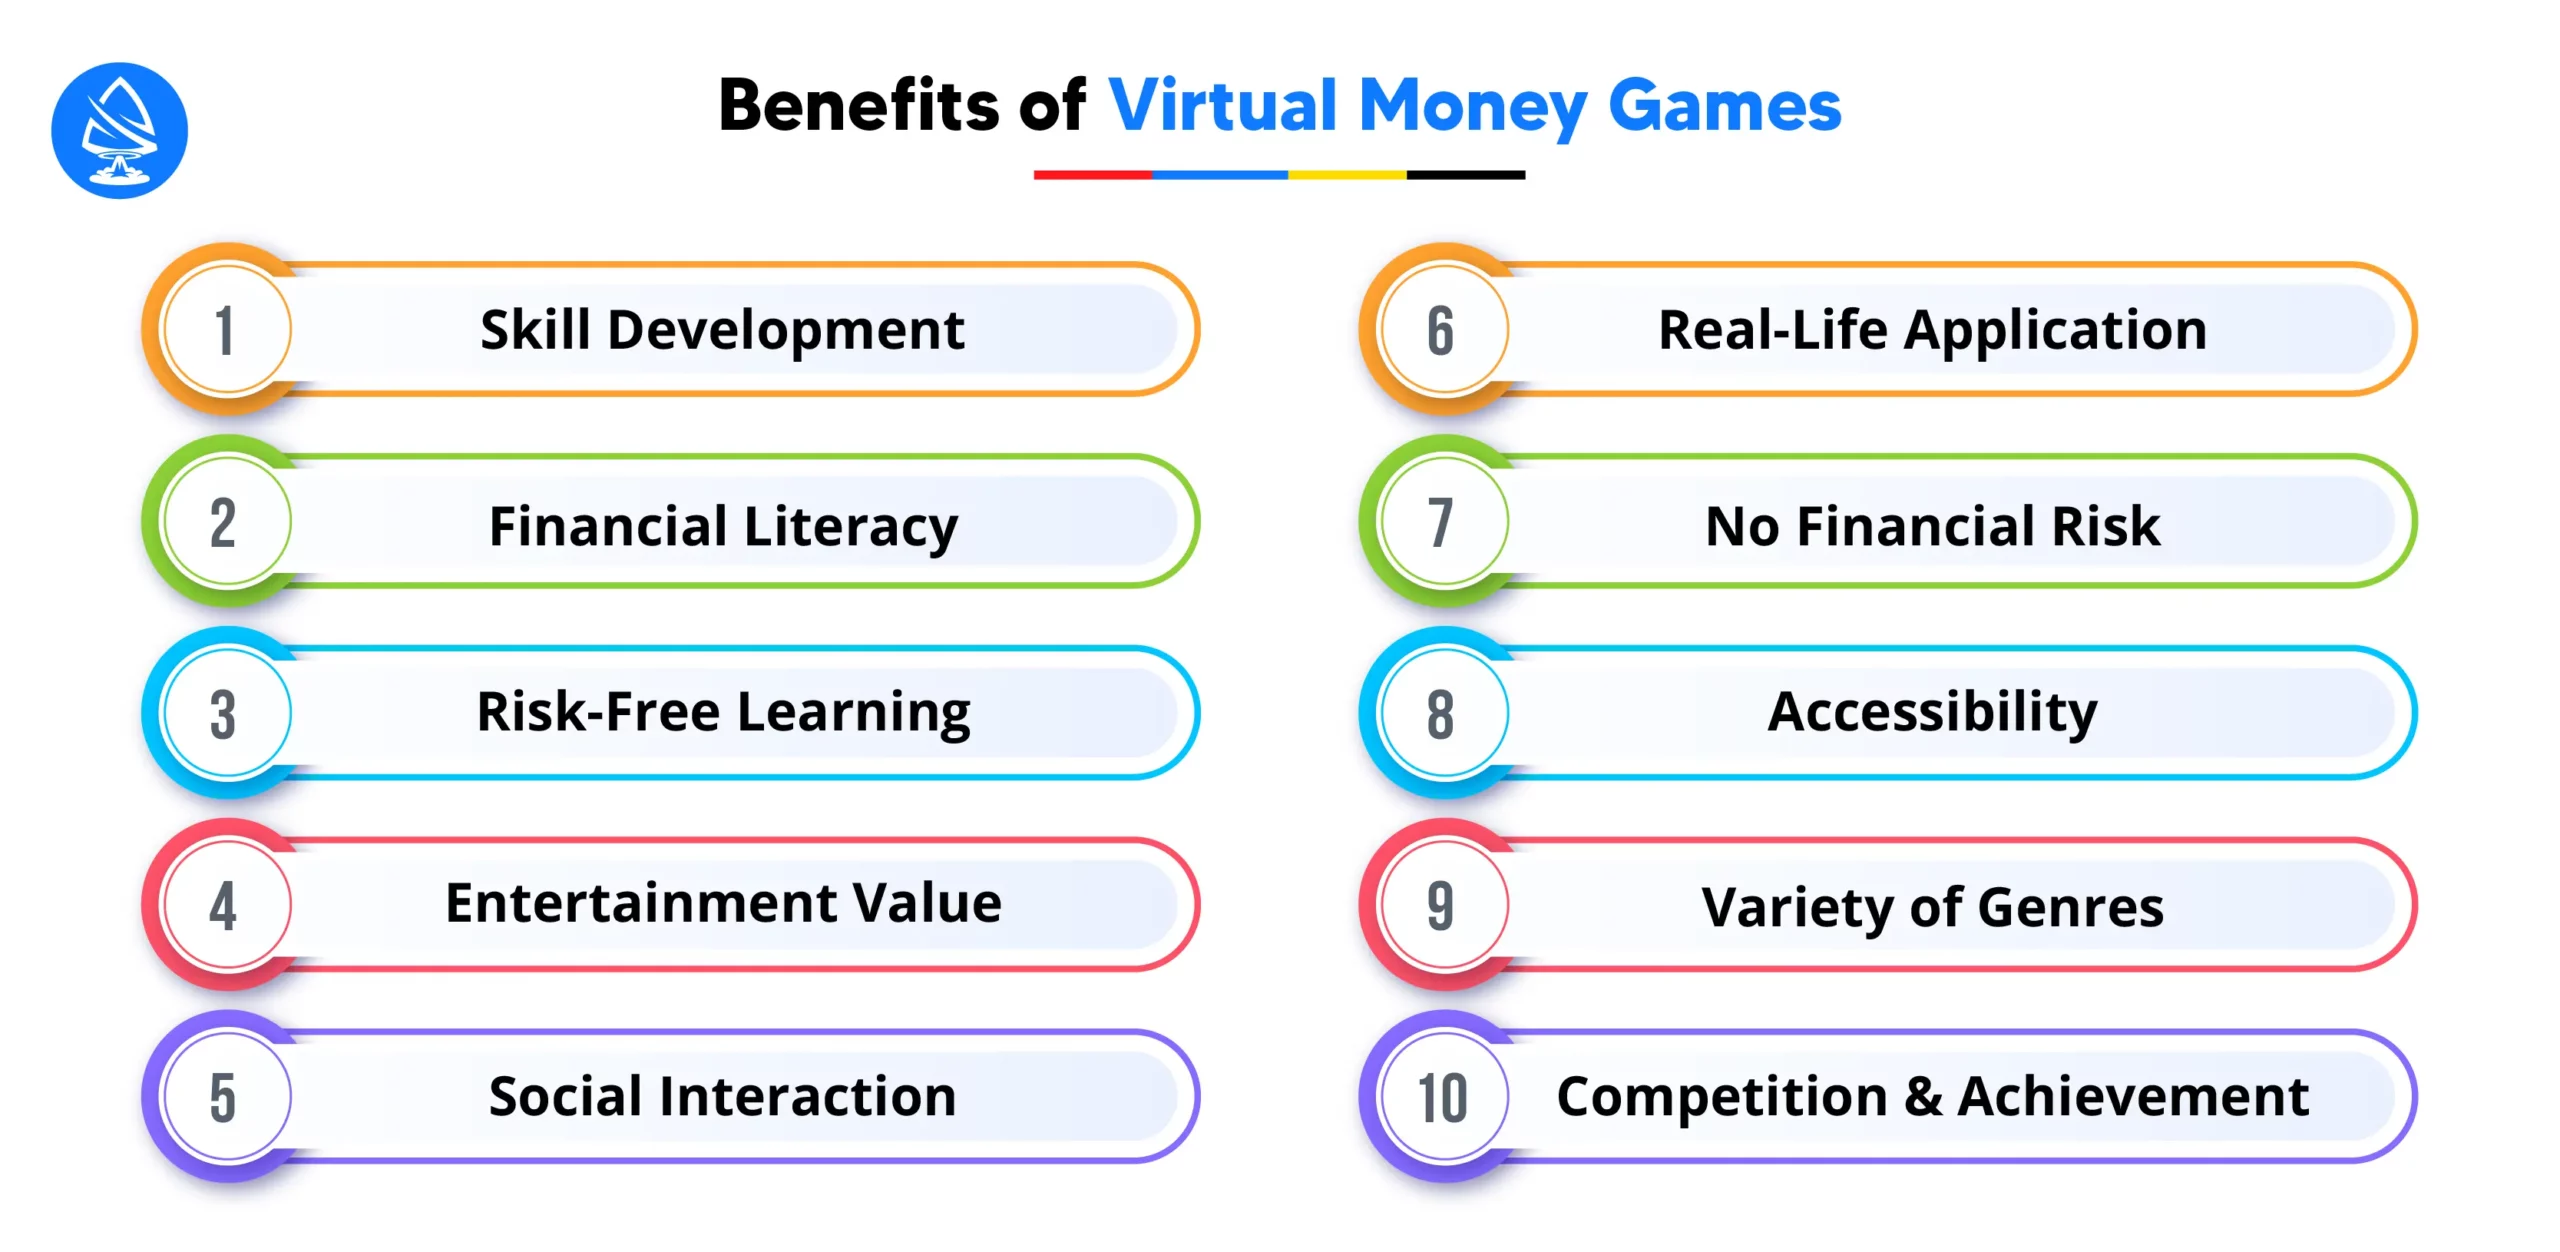 Benefits of Virtual Money Games